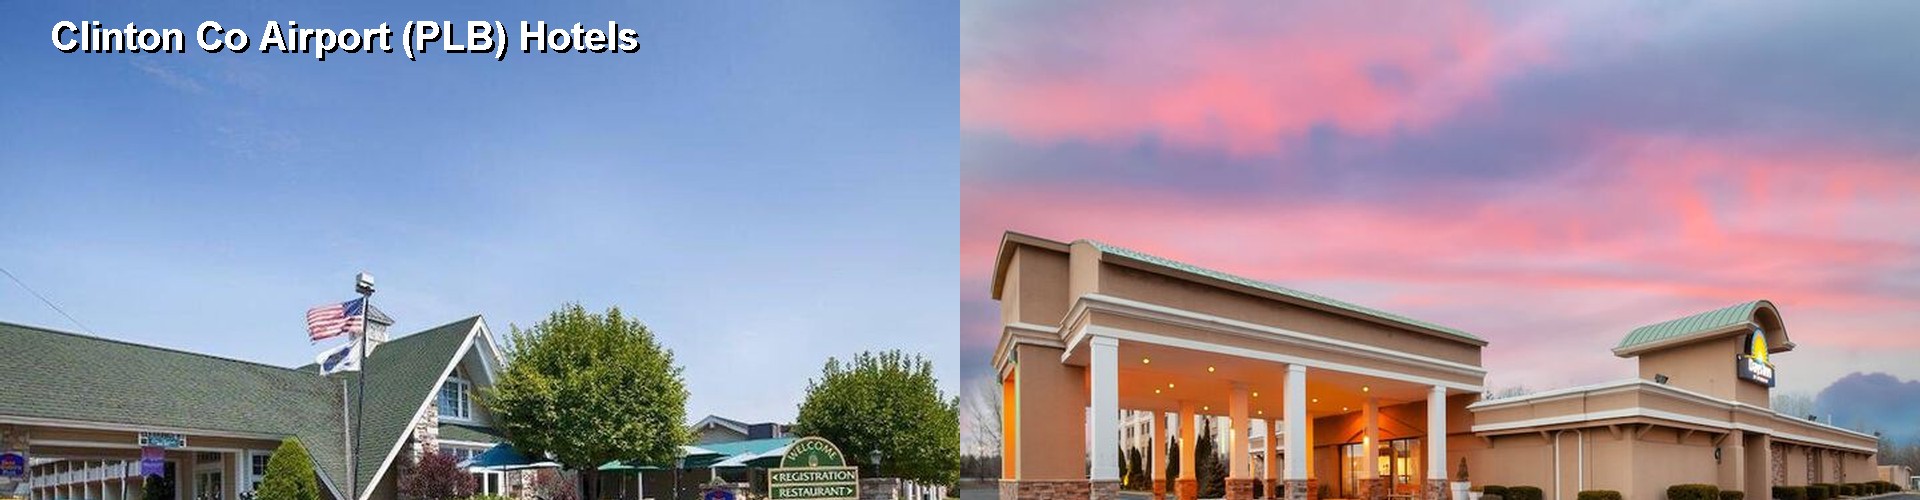 5 Best Hotels near Clinton Co Airport (PLB)